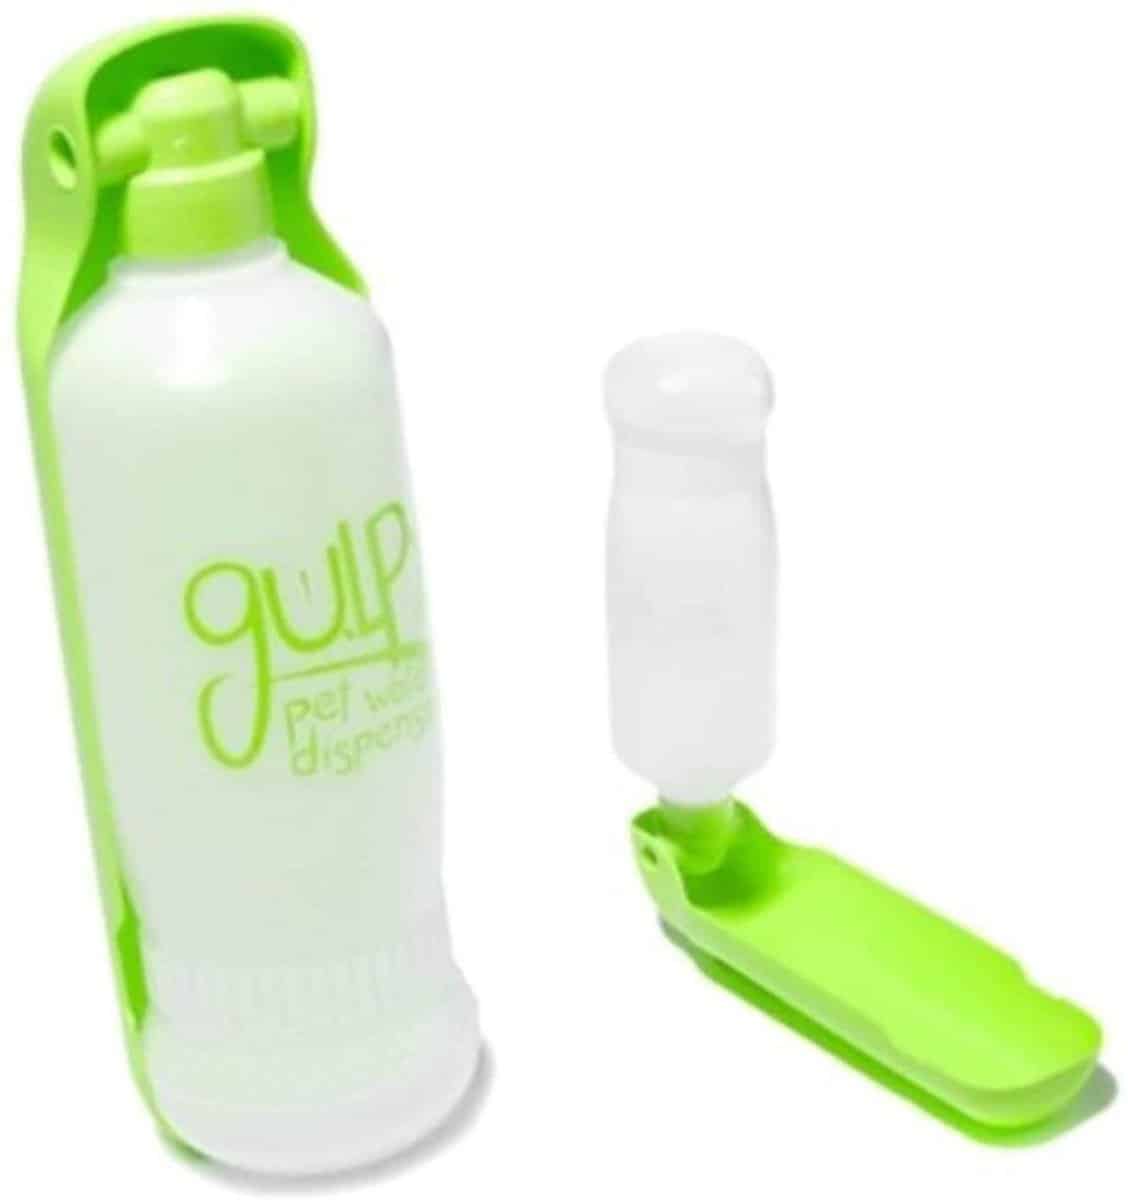 The Gulpy Jr dog water bottle